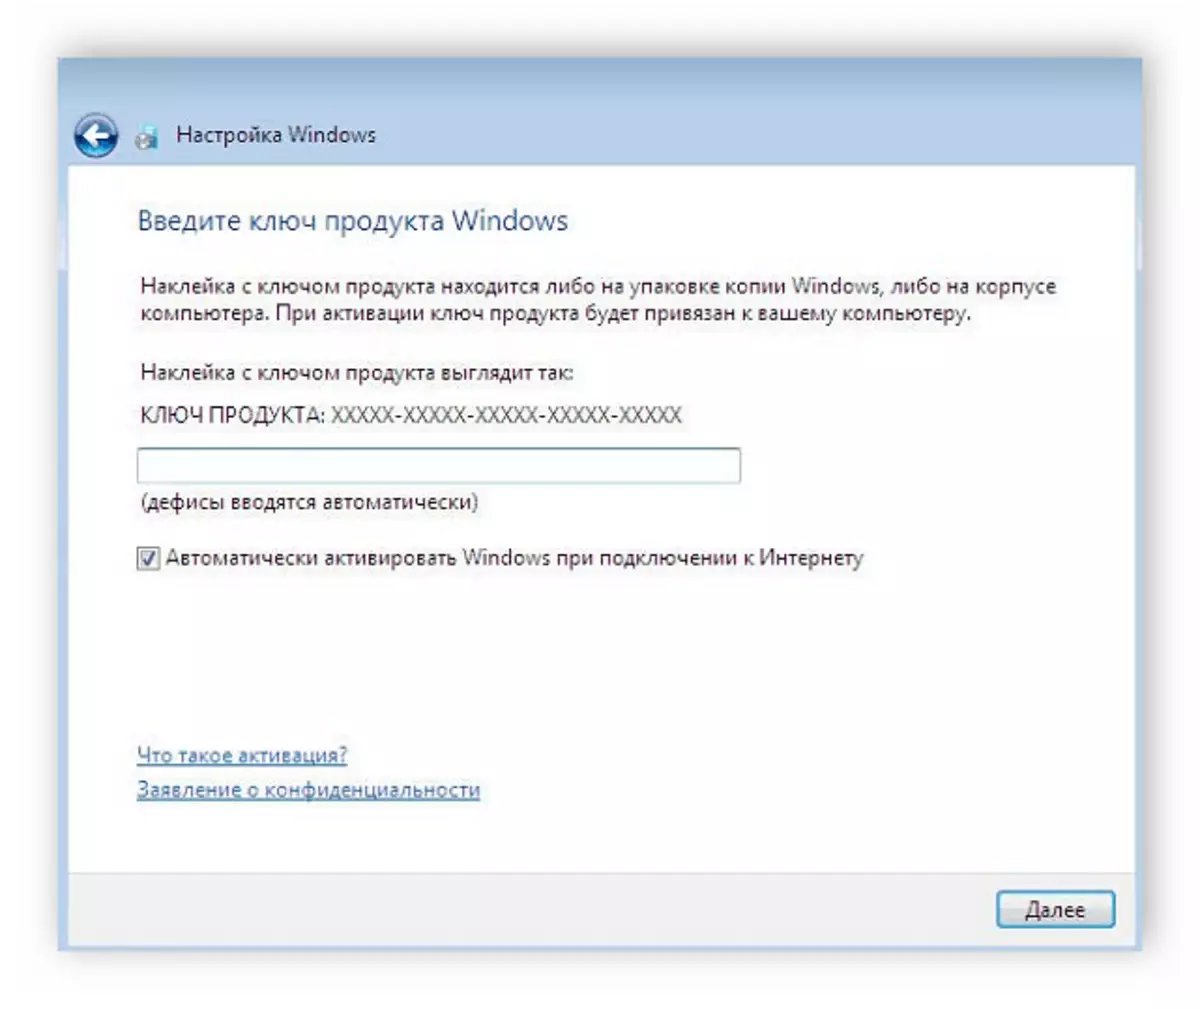 Windows 7 نى قوزغىتىش ئۈچۈن كۇنۇپكىنى كىرگۈزۈڭ